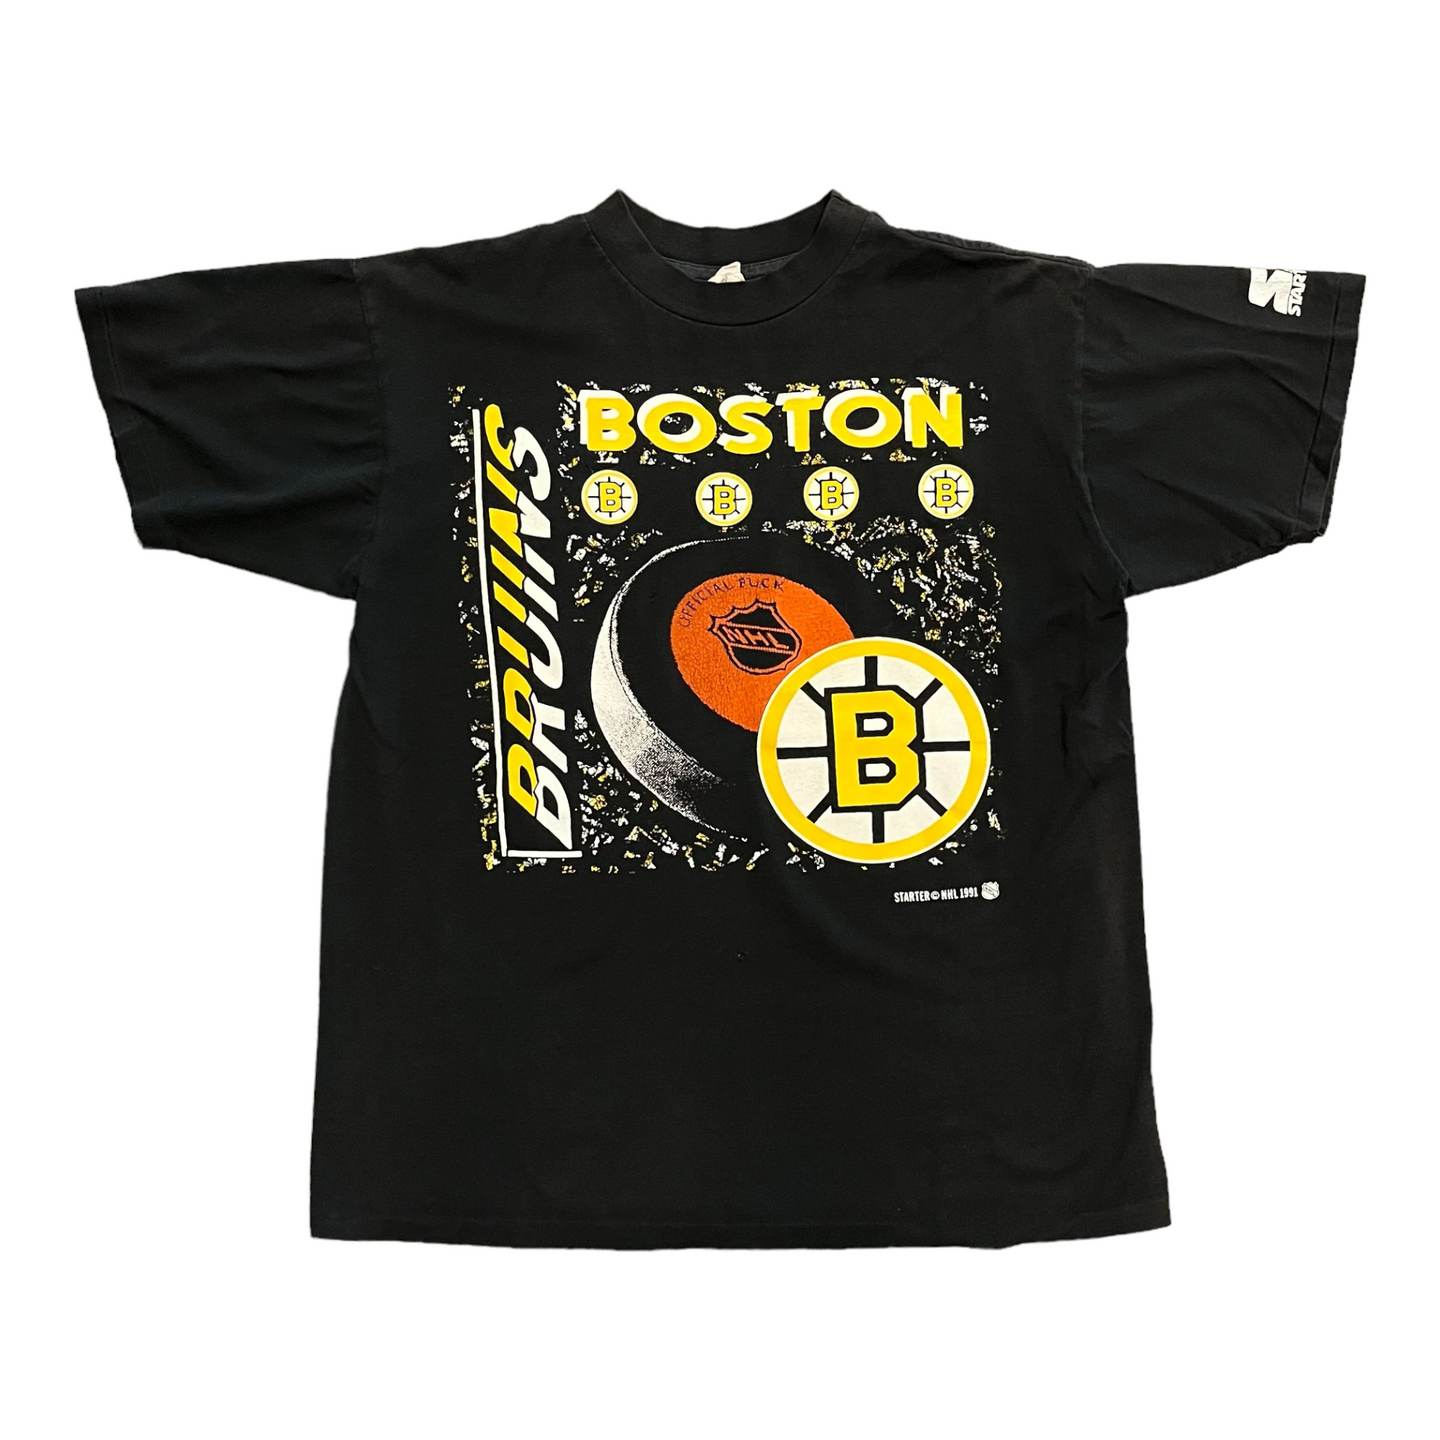 1991 Boston Bruins Starter tee M